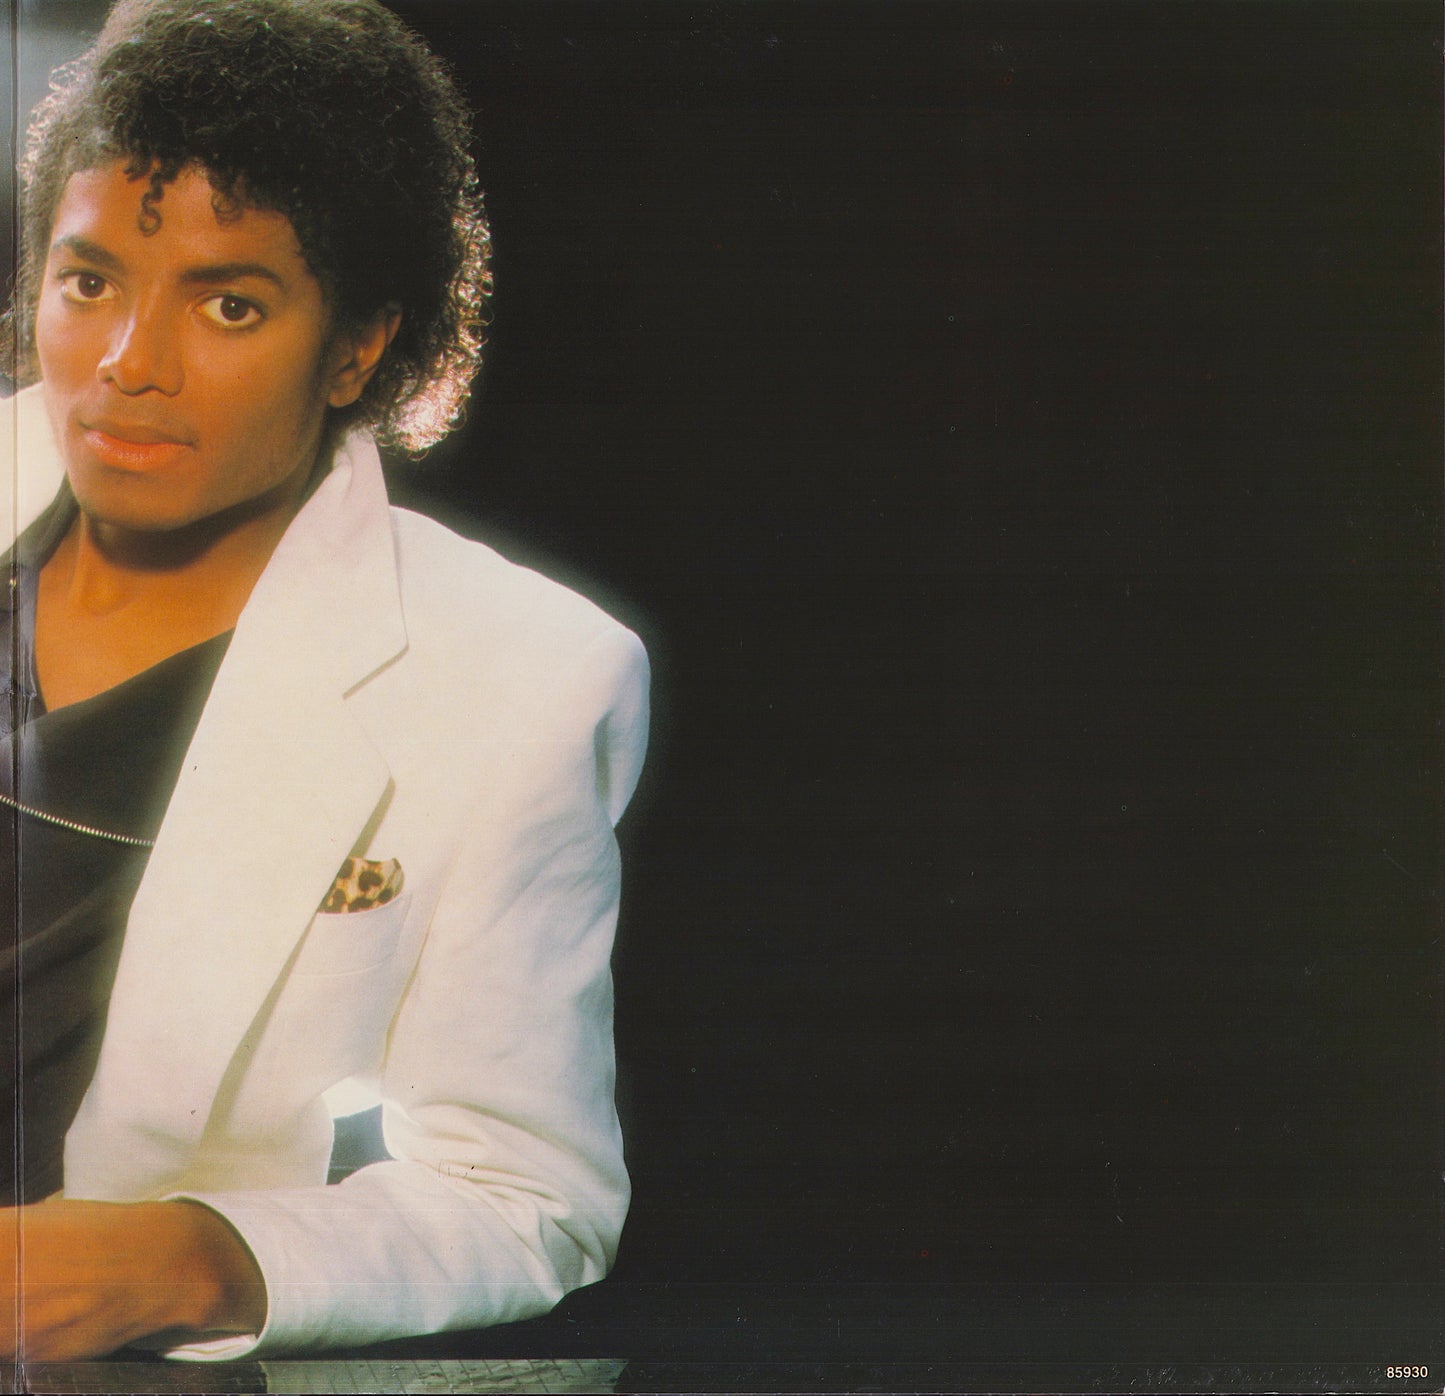 Michael Jackson - Thriller Vinyl LP UK